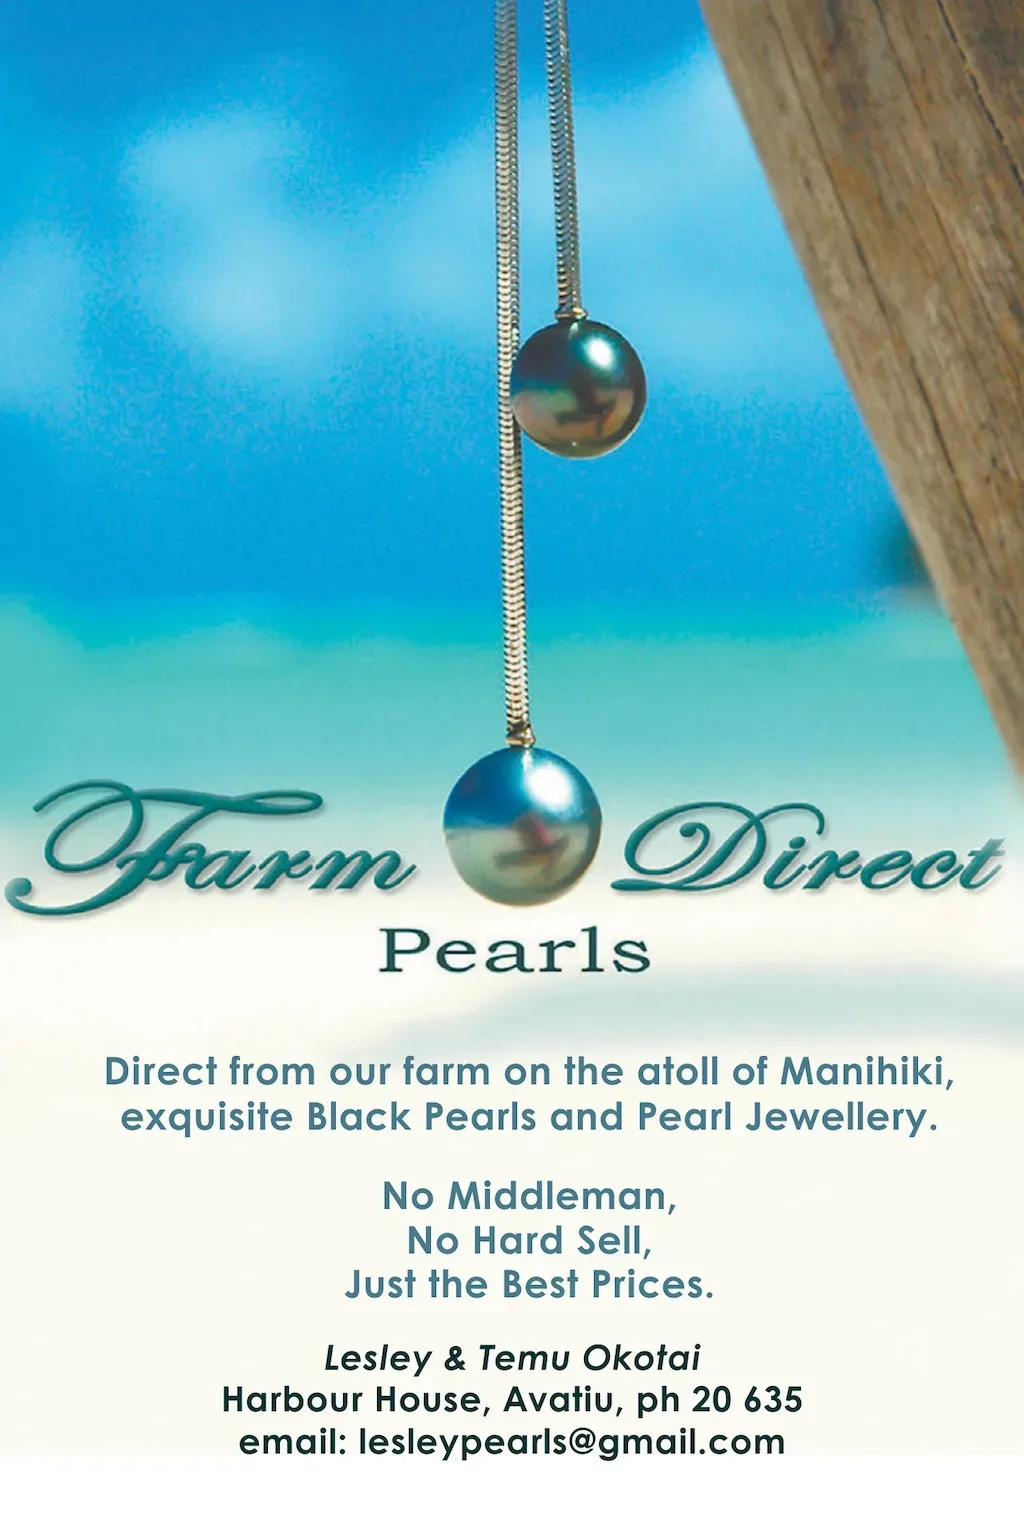 Farm Direct Pearls